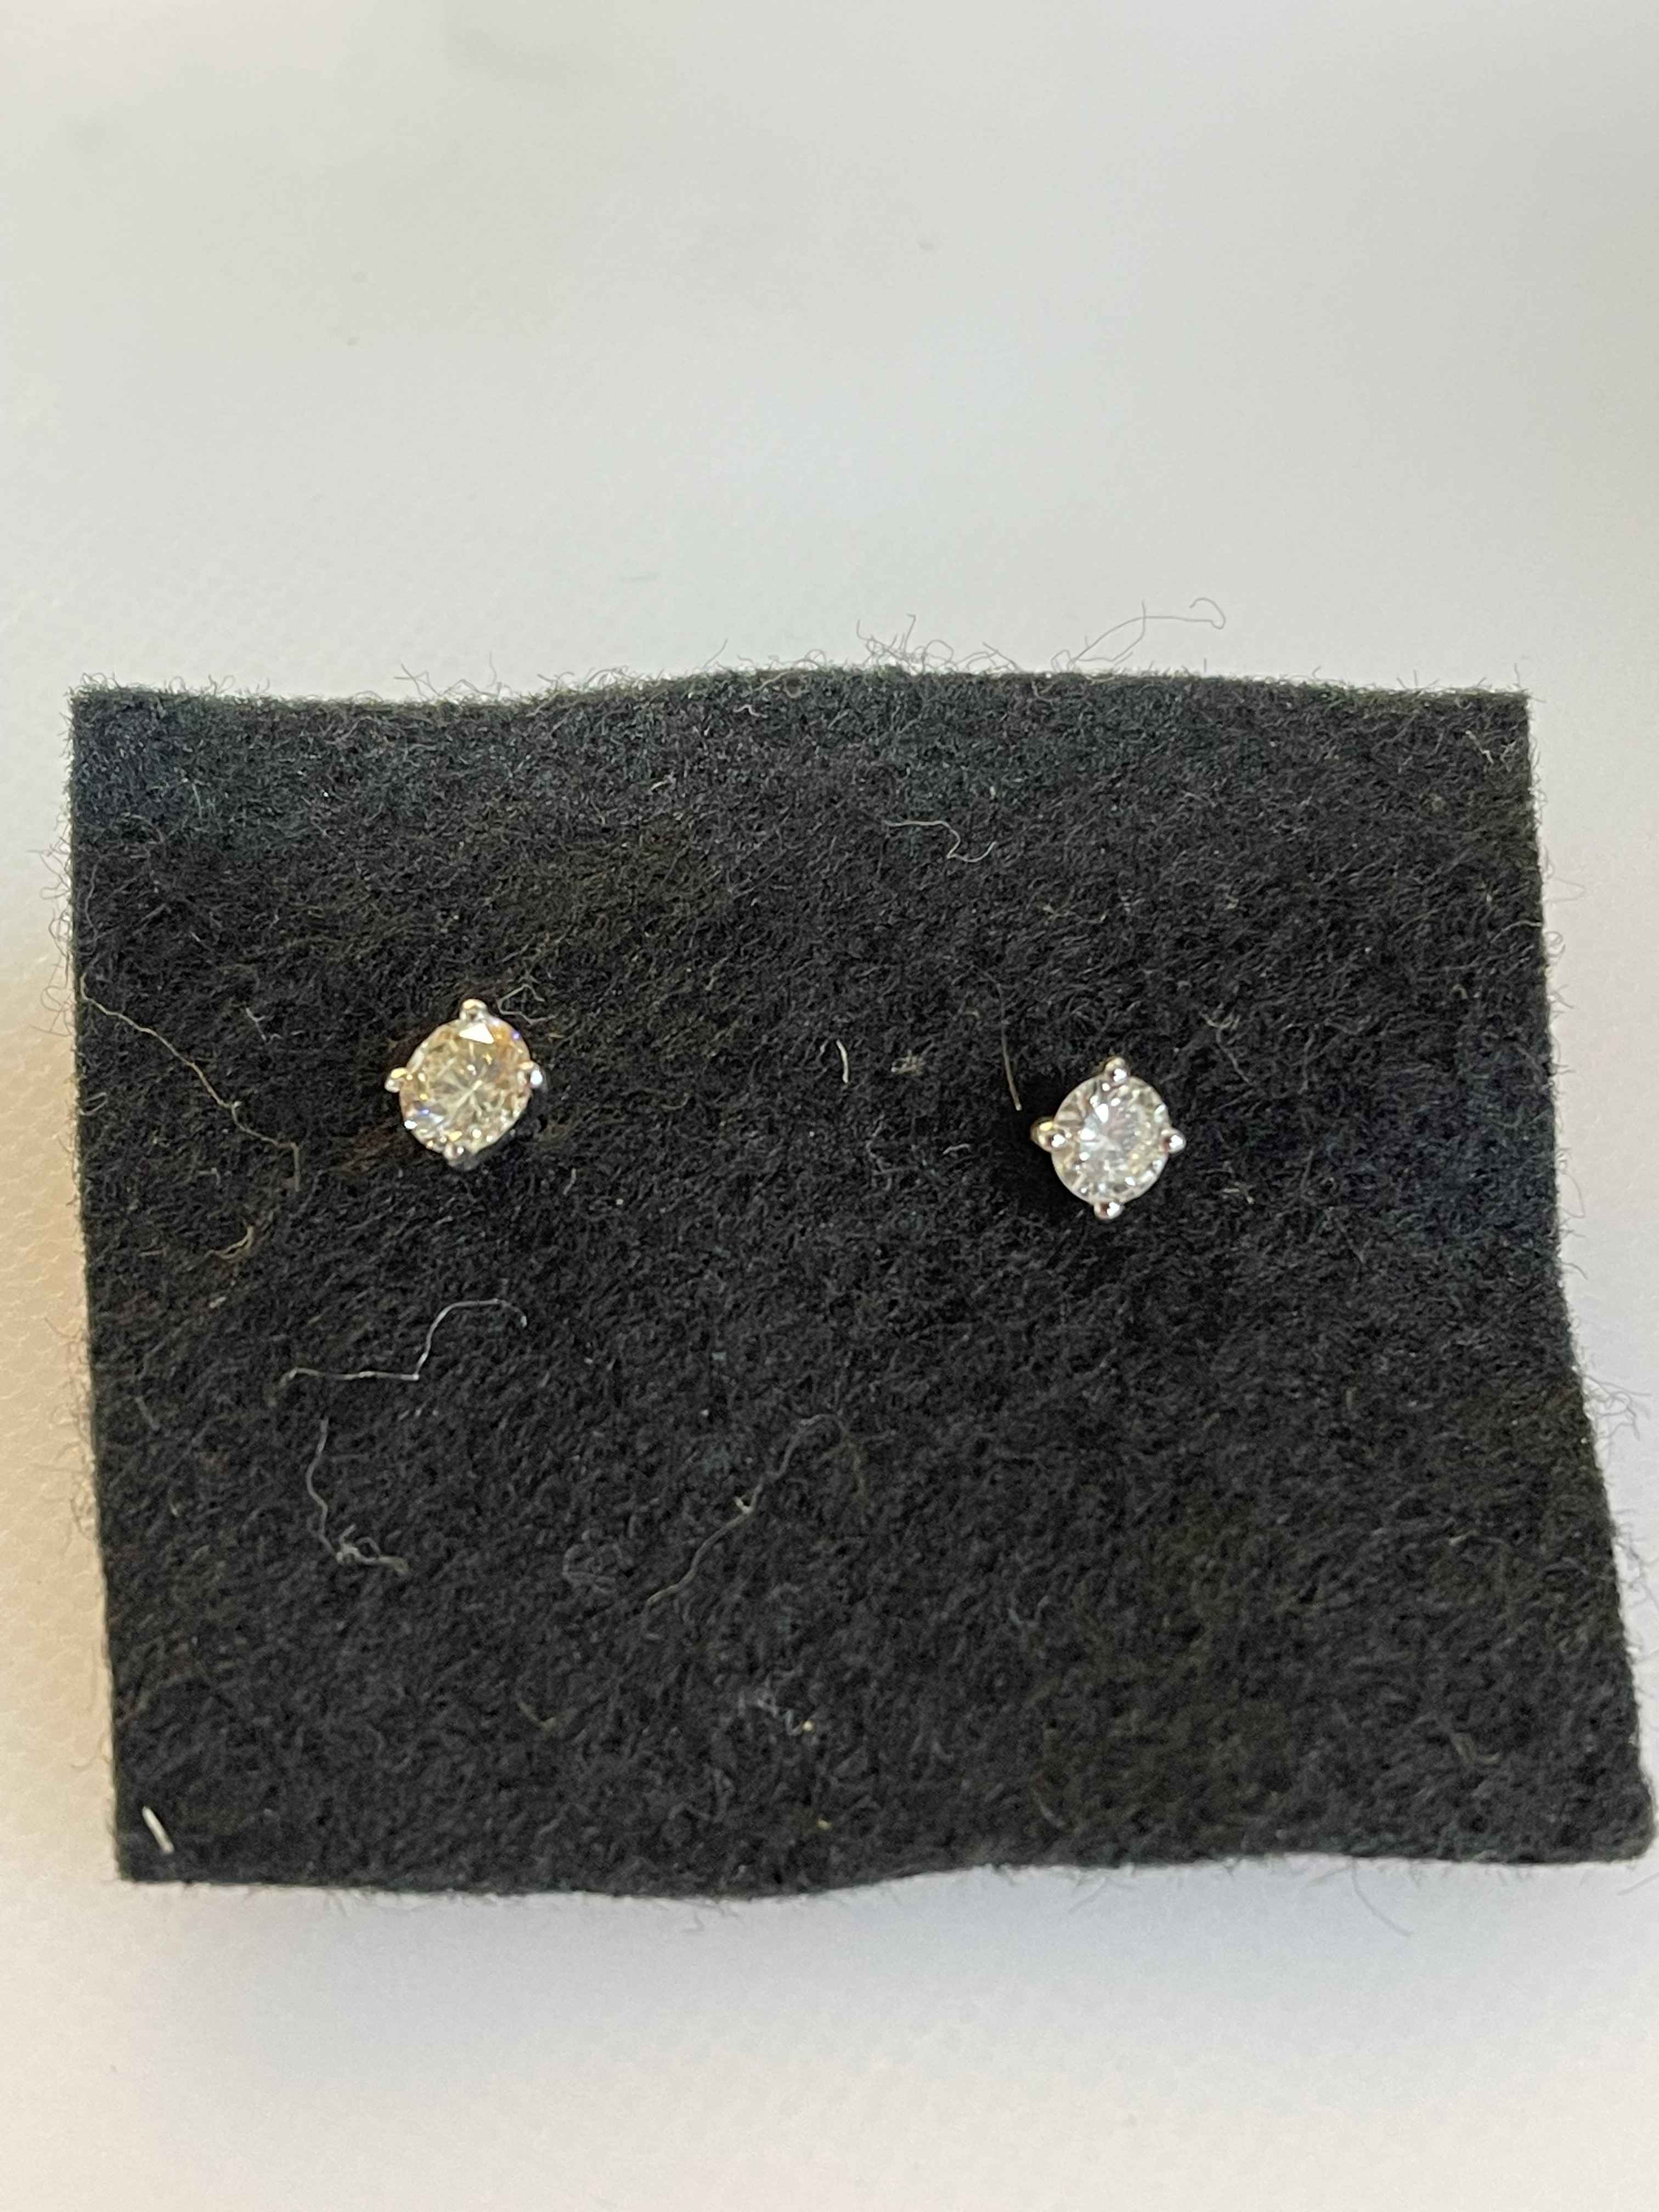 Pair of 18 carat white gold and diamond stud earrings, diamonds 0.51 carats.